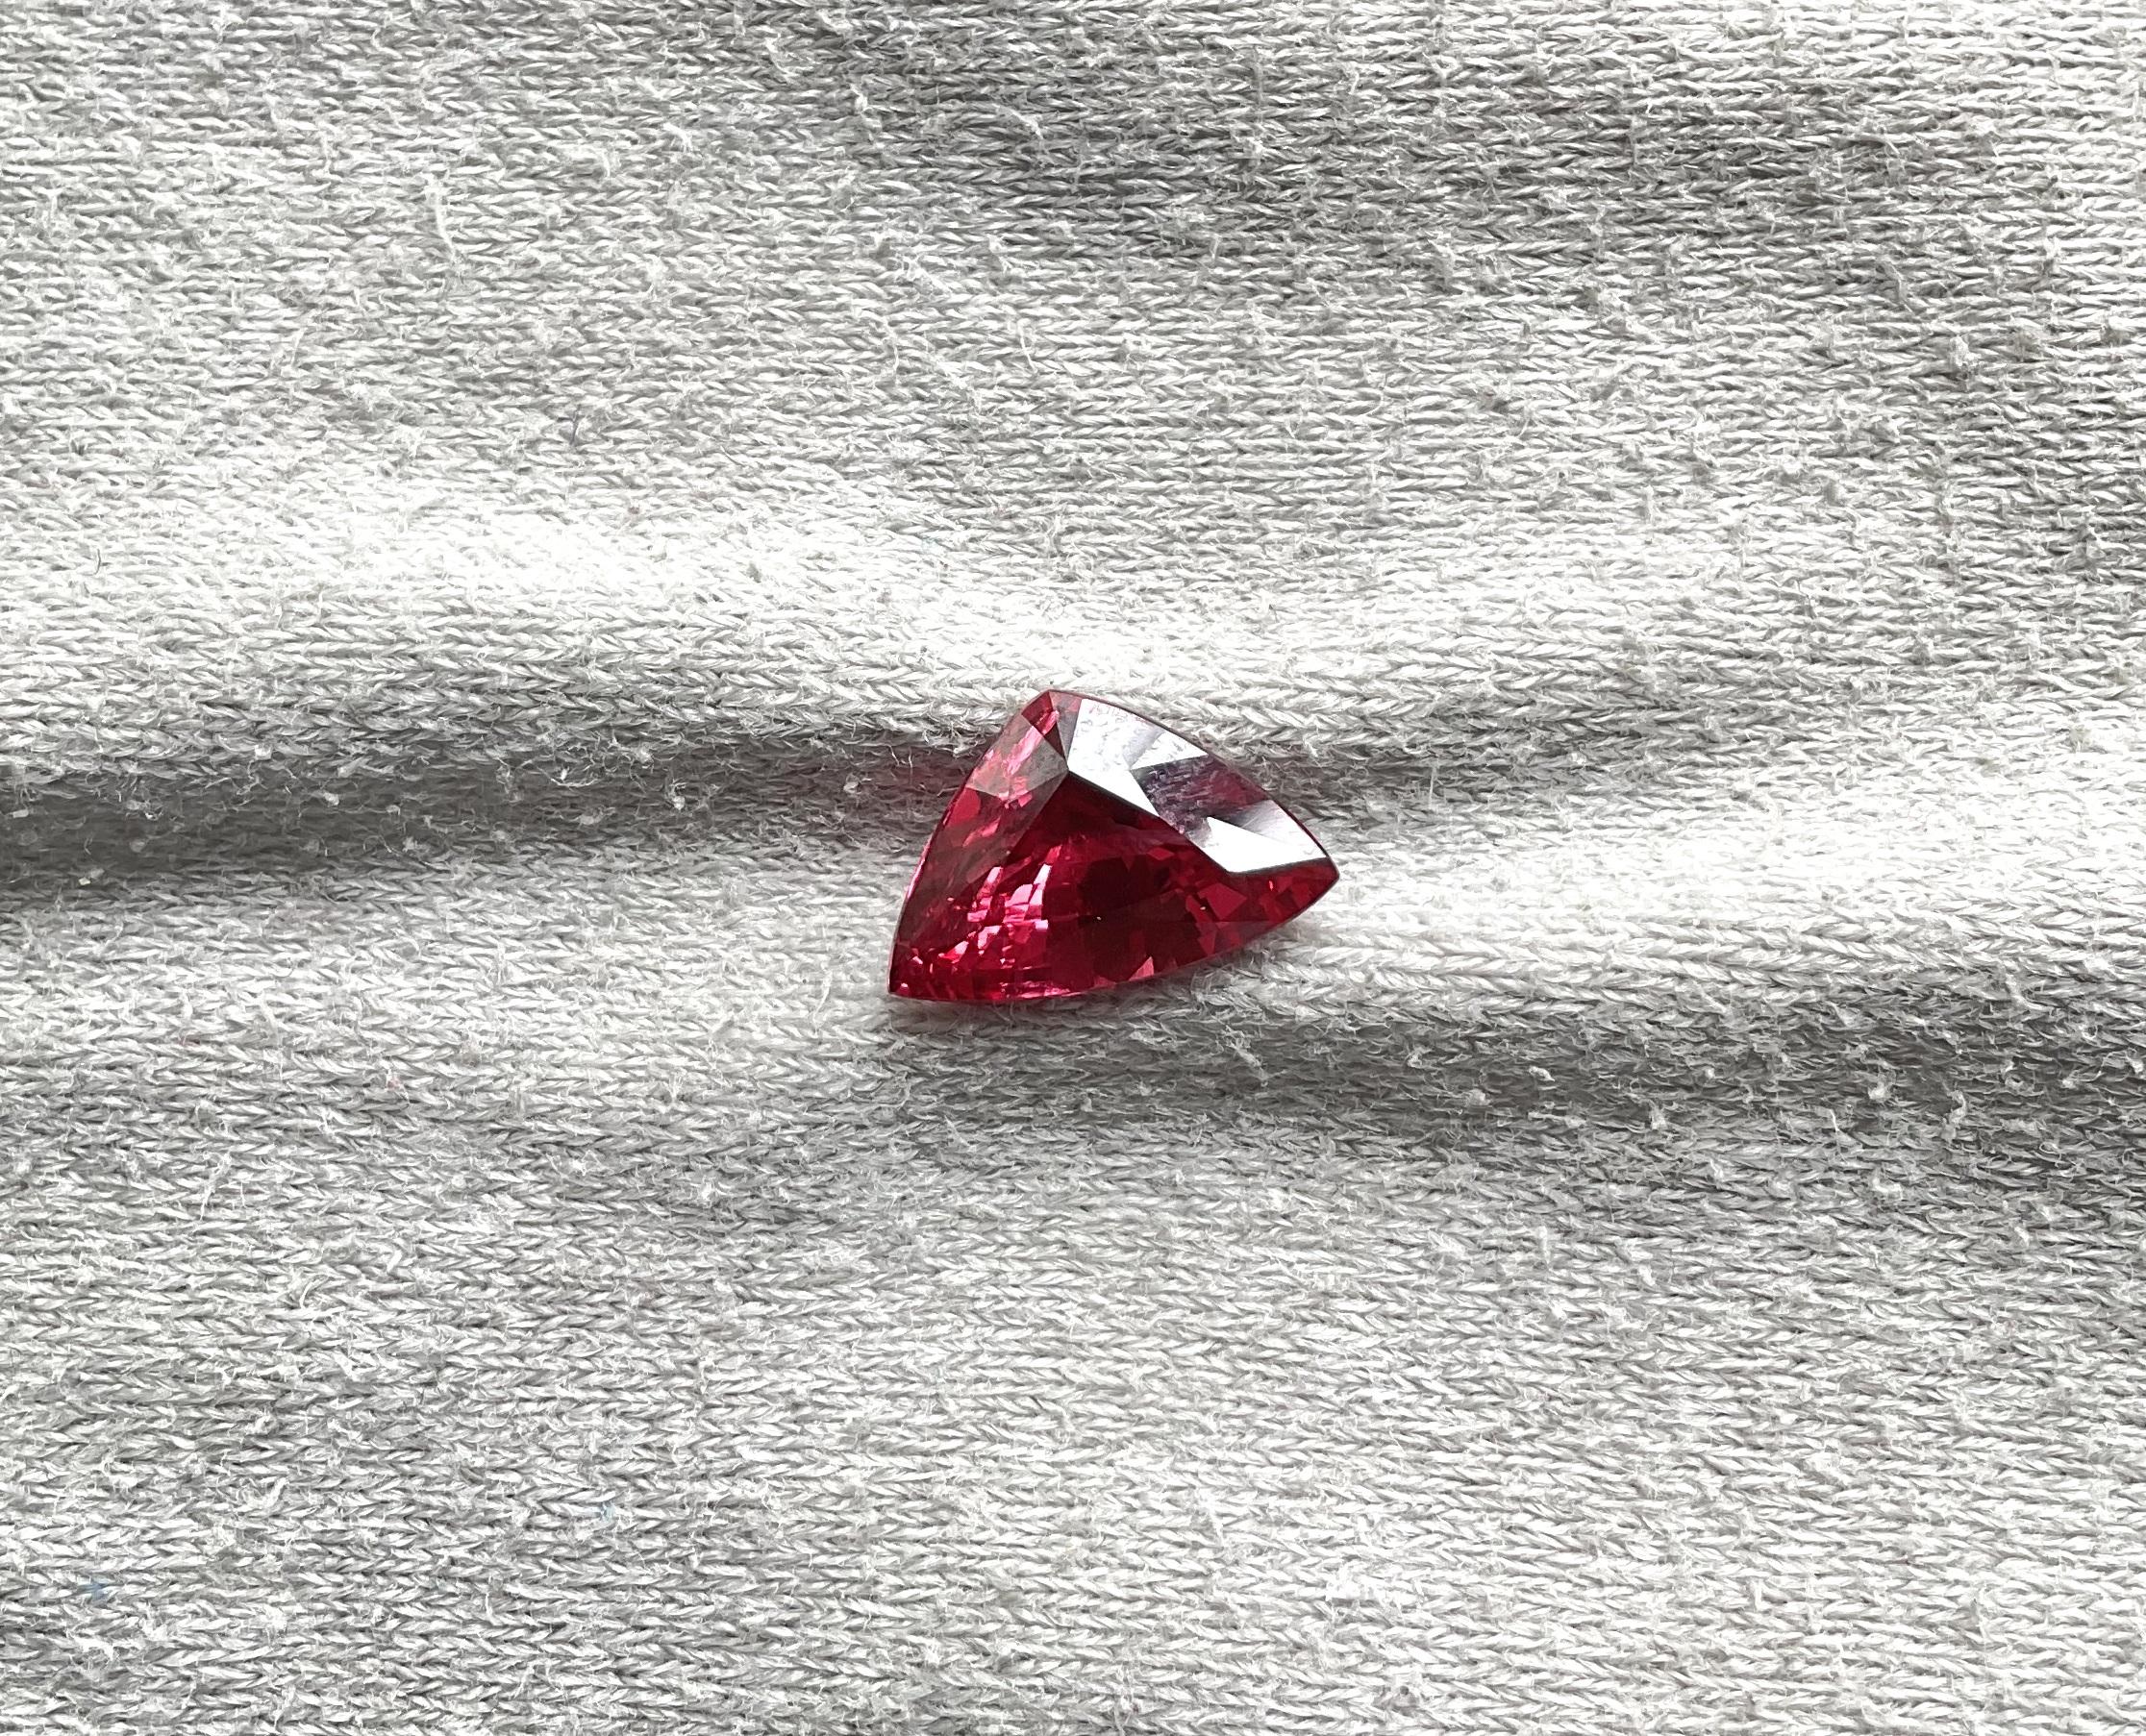 certified 3.02 carats burmese red spinel natural triangular cut stone natural gem

Weight: 3.02 Carats
Size: 12.22x8.03x5.13 MM
Pieces: 1
Shape : triangular
